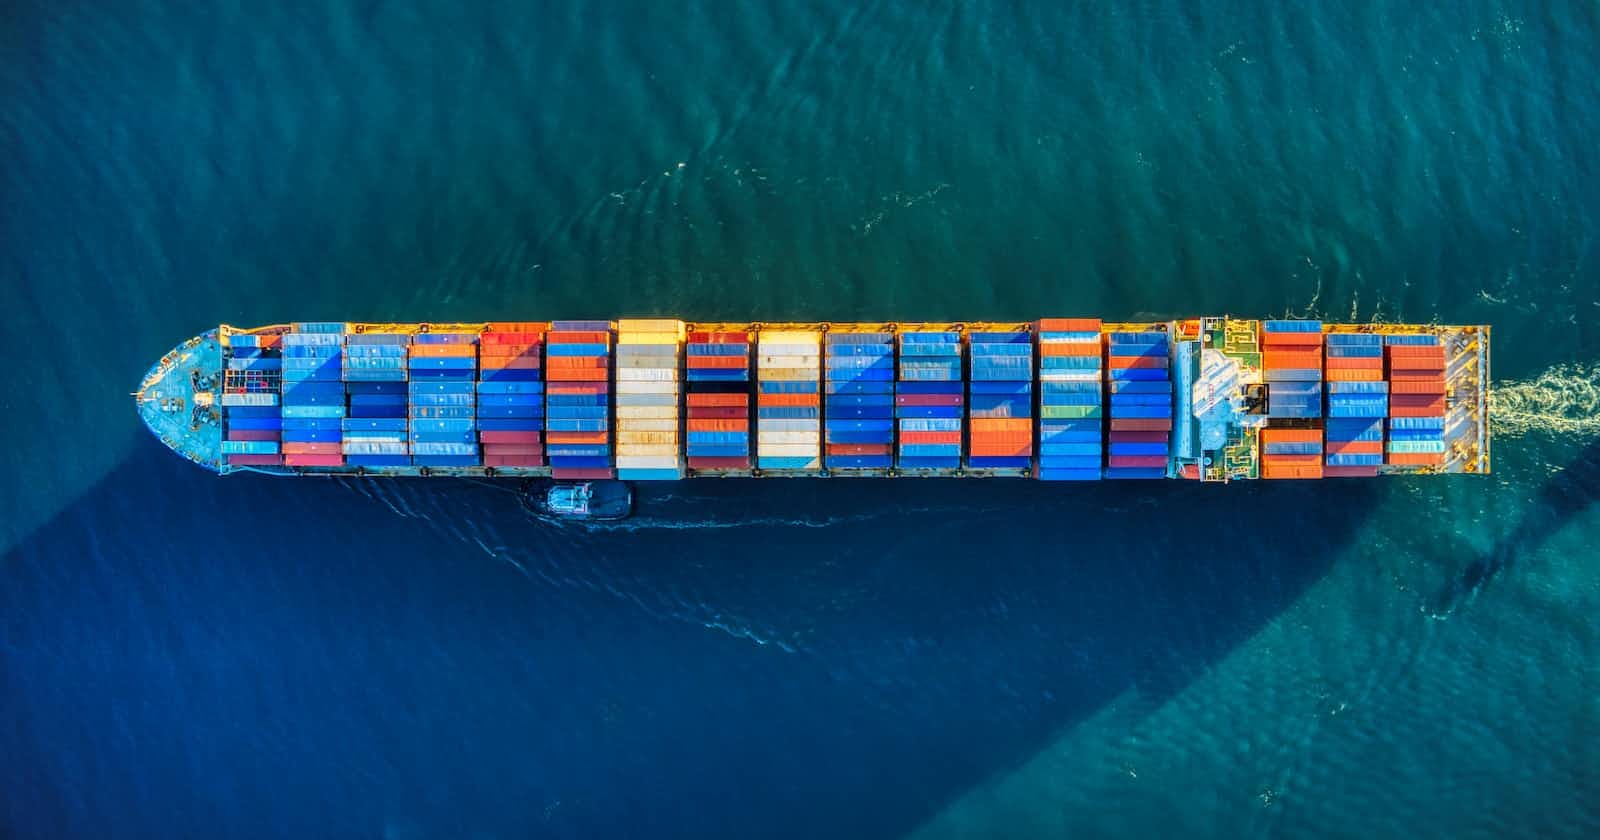 Understanding Docker and Containers